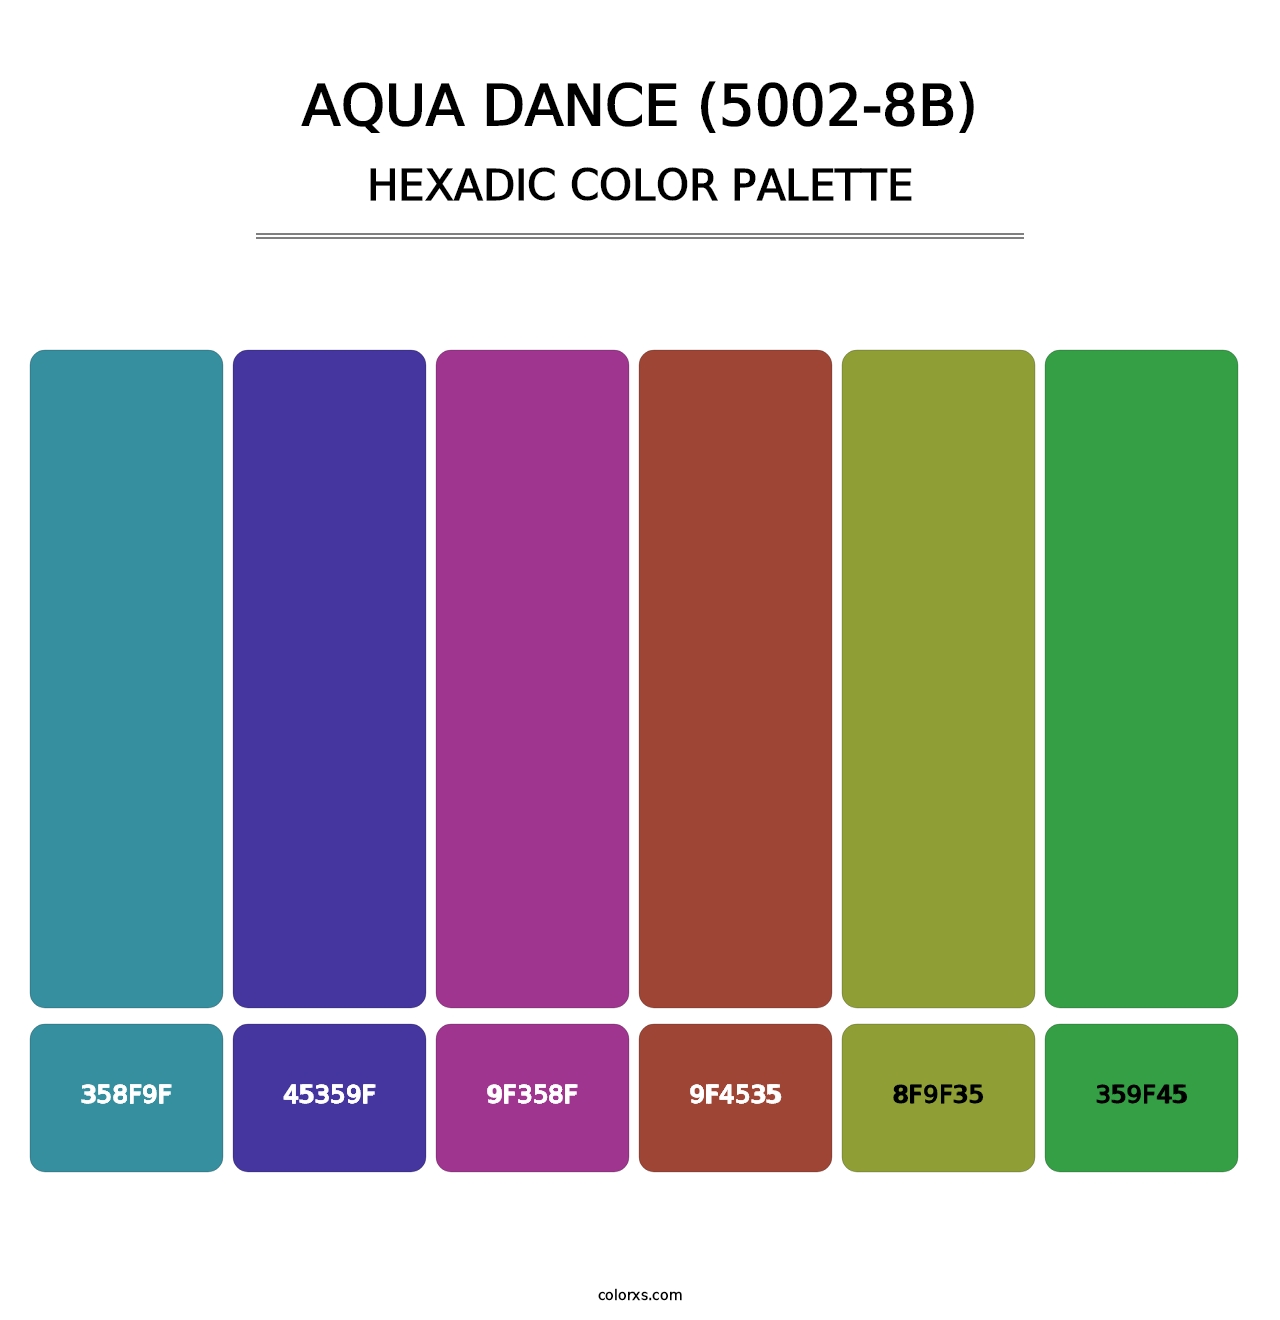 Aqua Dance (5002-8B) - Hexadic Color Palette